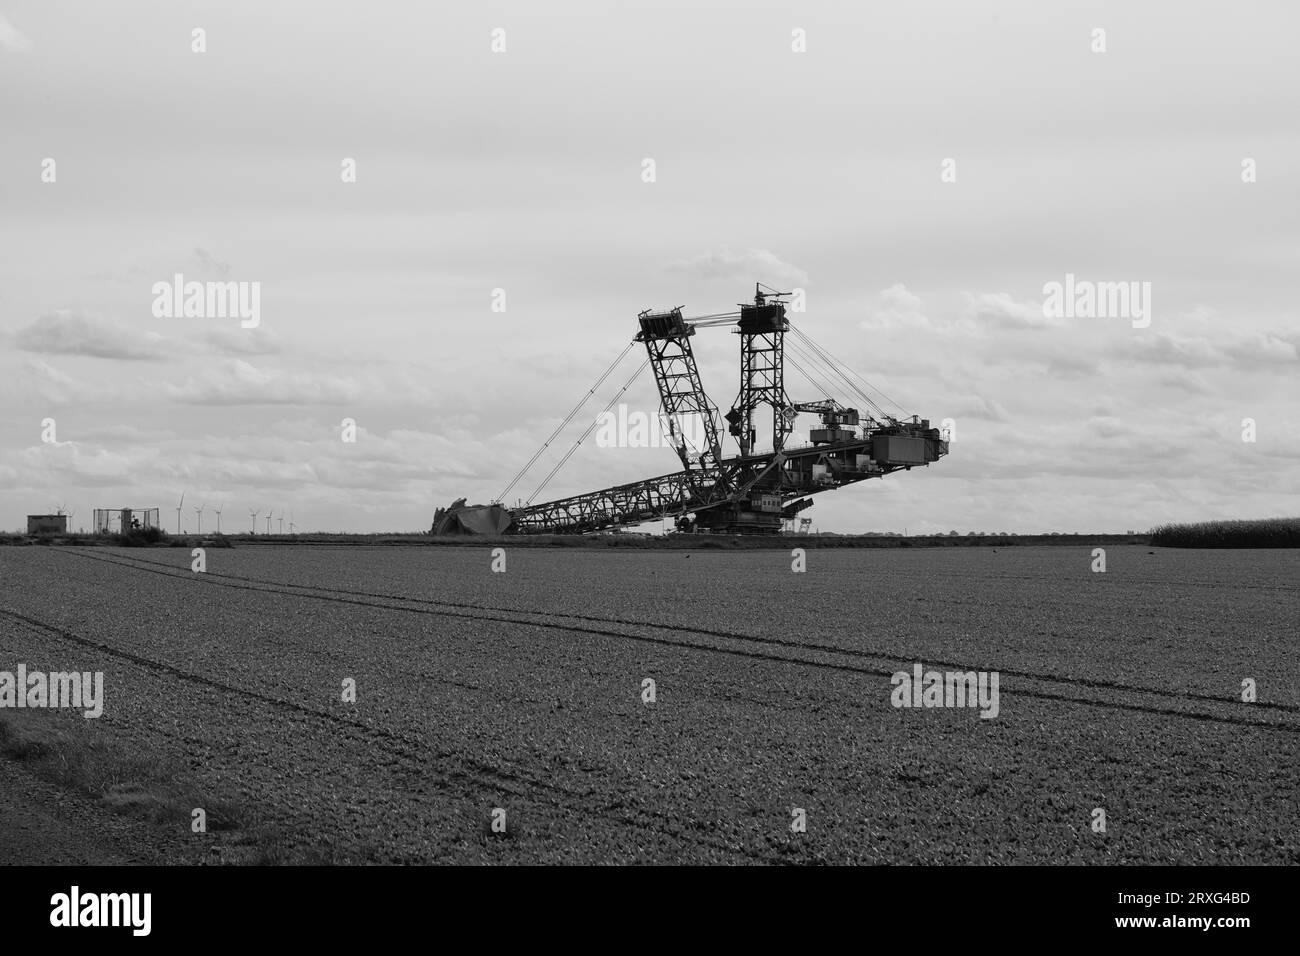 Large excavator on the edge of the Garzweiler opencast lignite mine, black and white, Rhenish lignite mining area, Germany Stock Photo